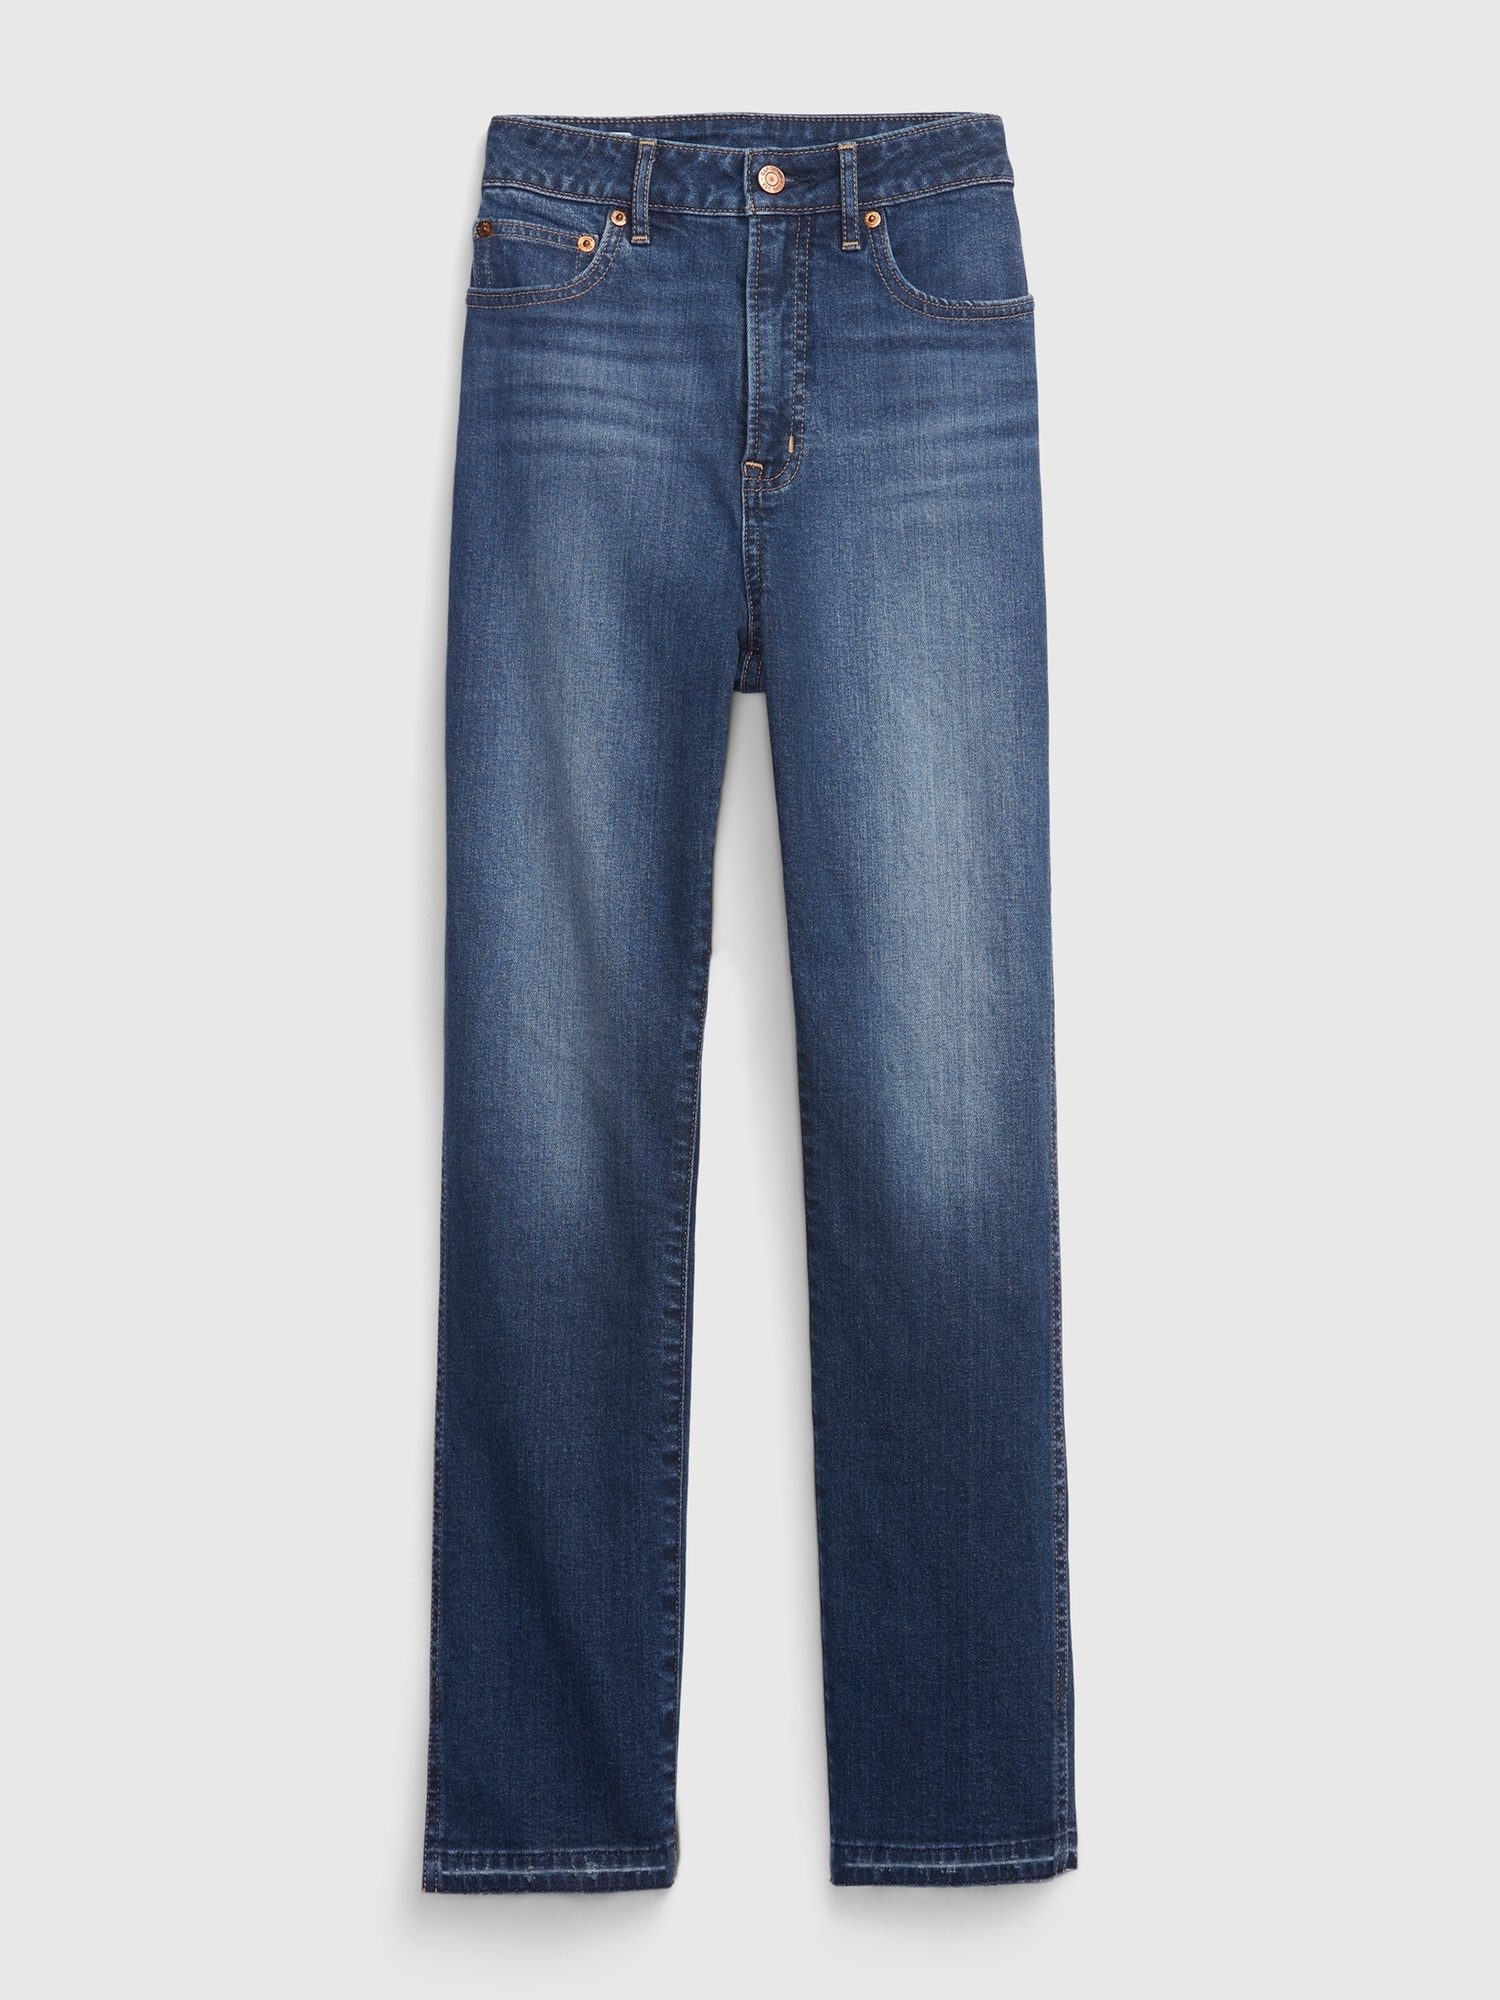 INC International Concepts Jeans Womens 16 Blue Denim High Rise Pants  Boyfriend